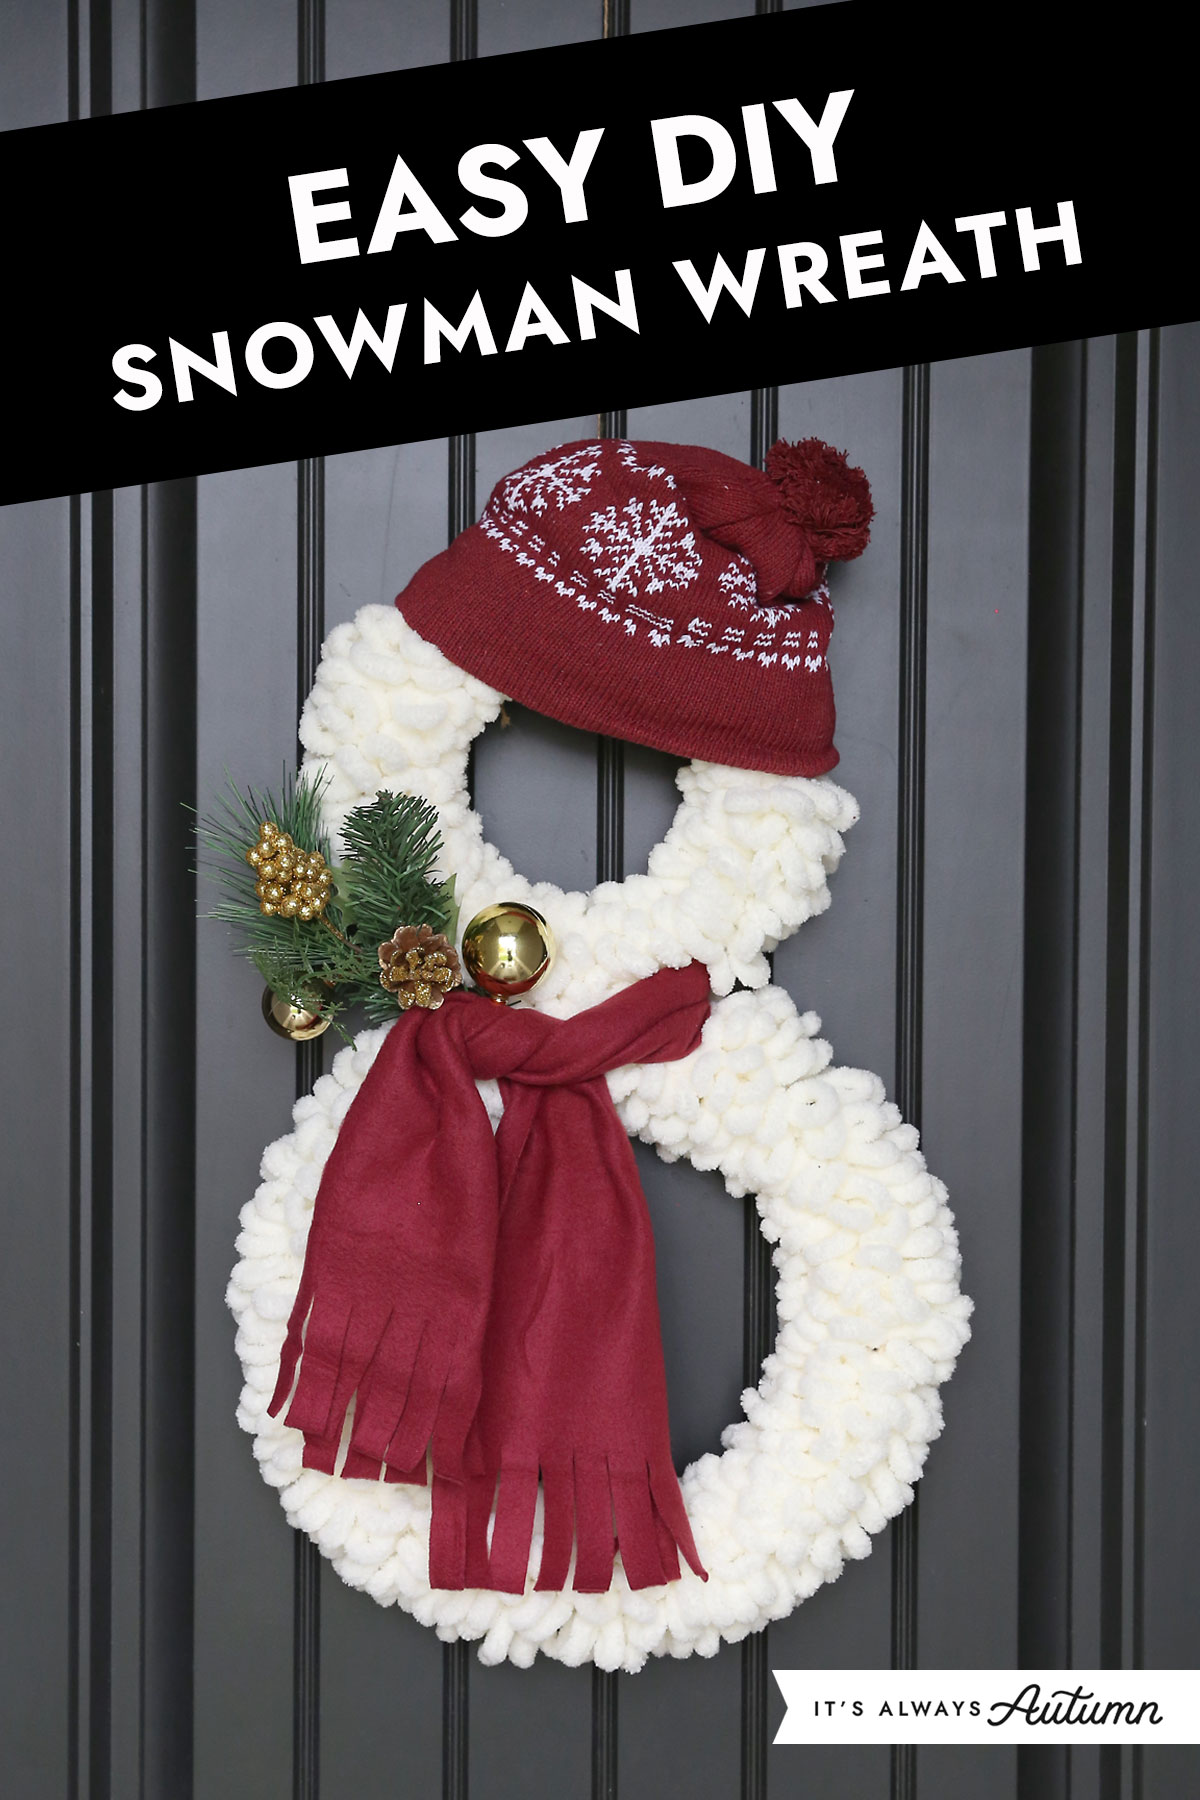 Easy DIY snowman wreath